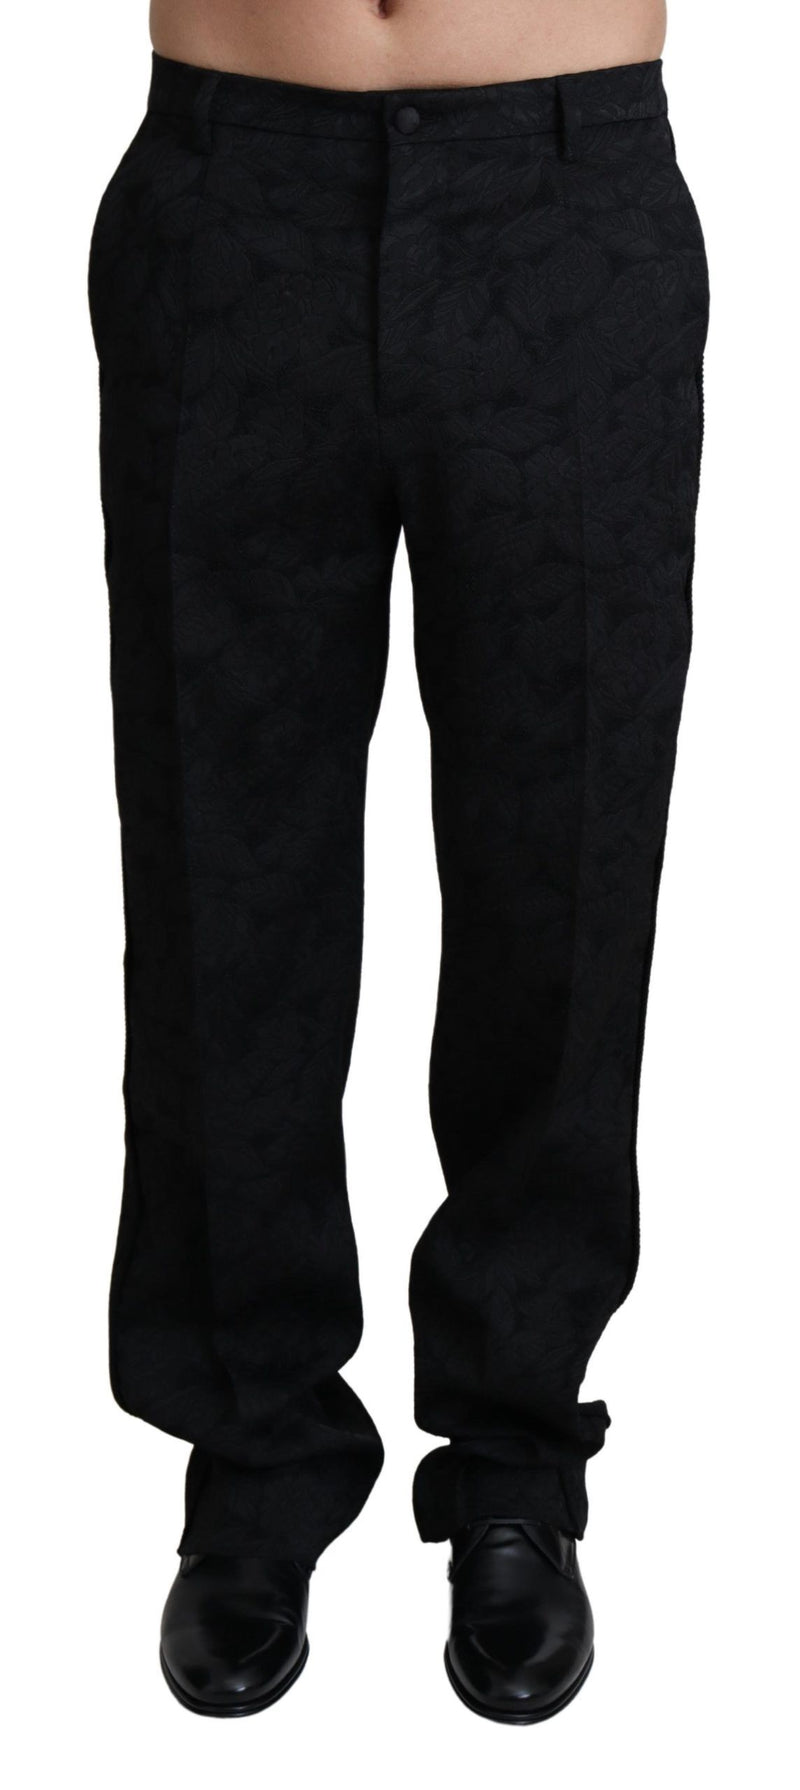 Dolce & Gabbana Elegant Black Dress Pants for Sophisticated Men's Style